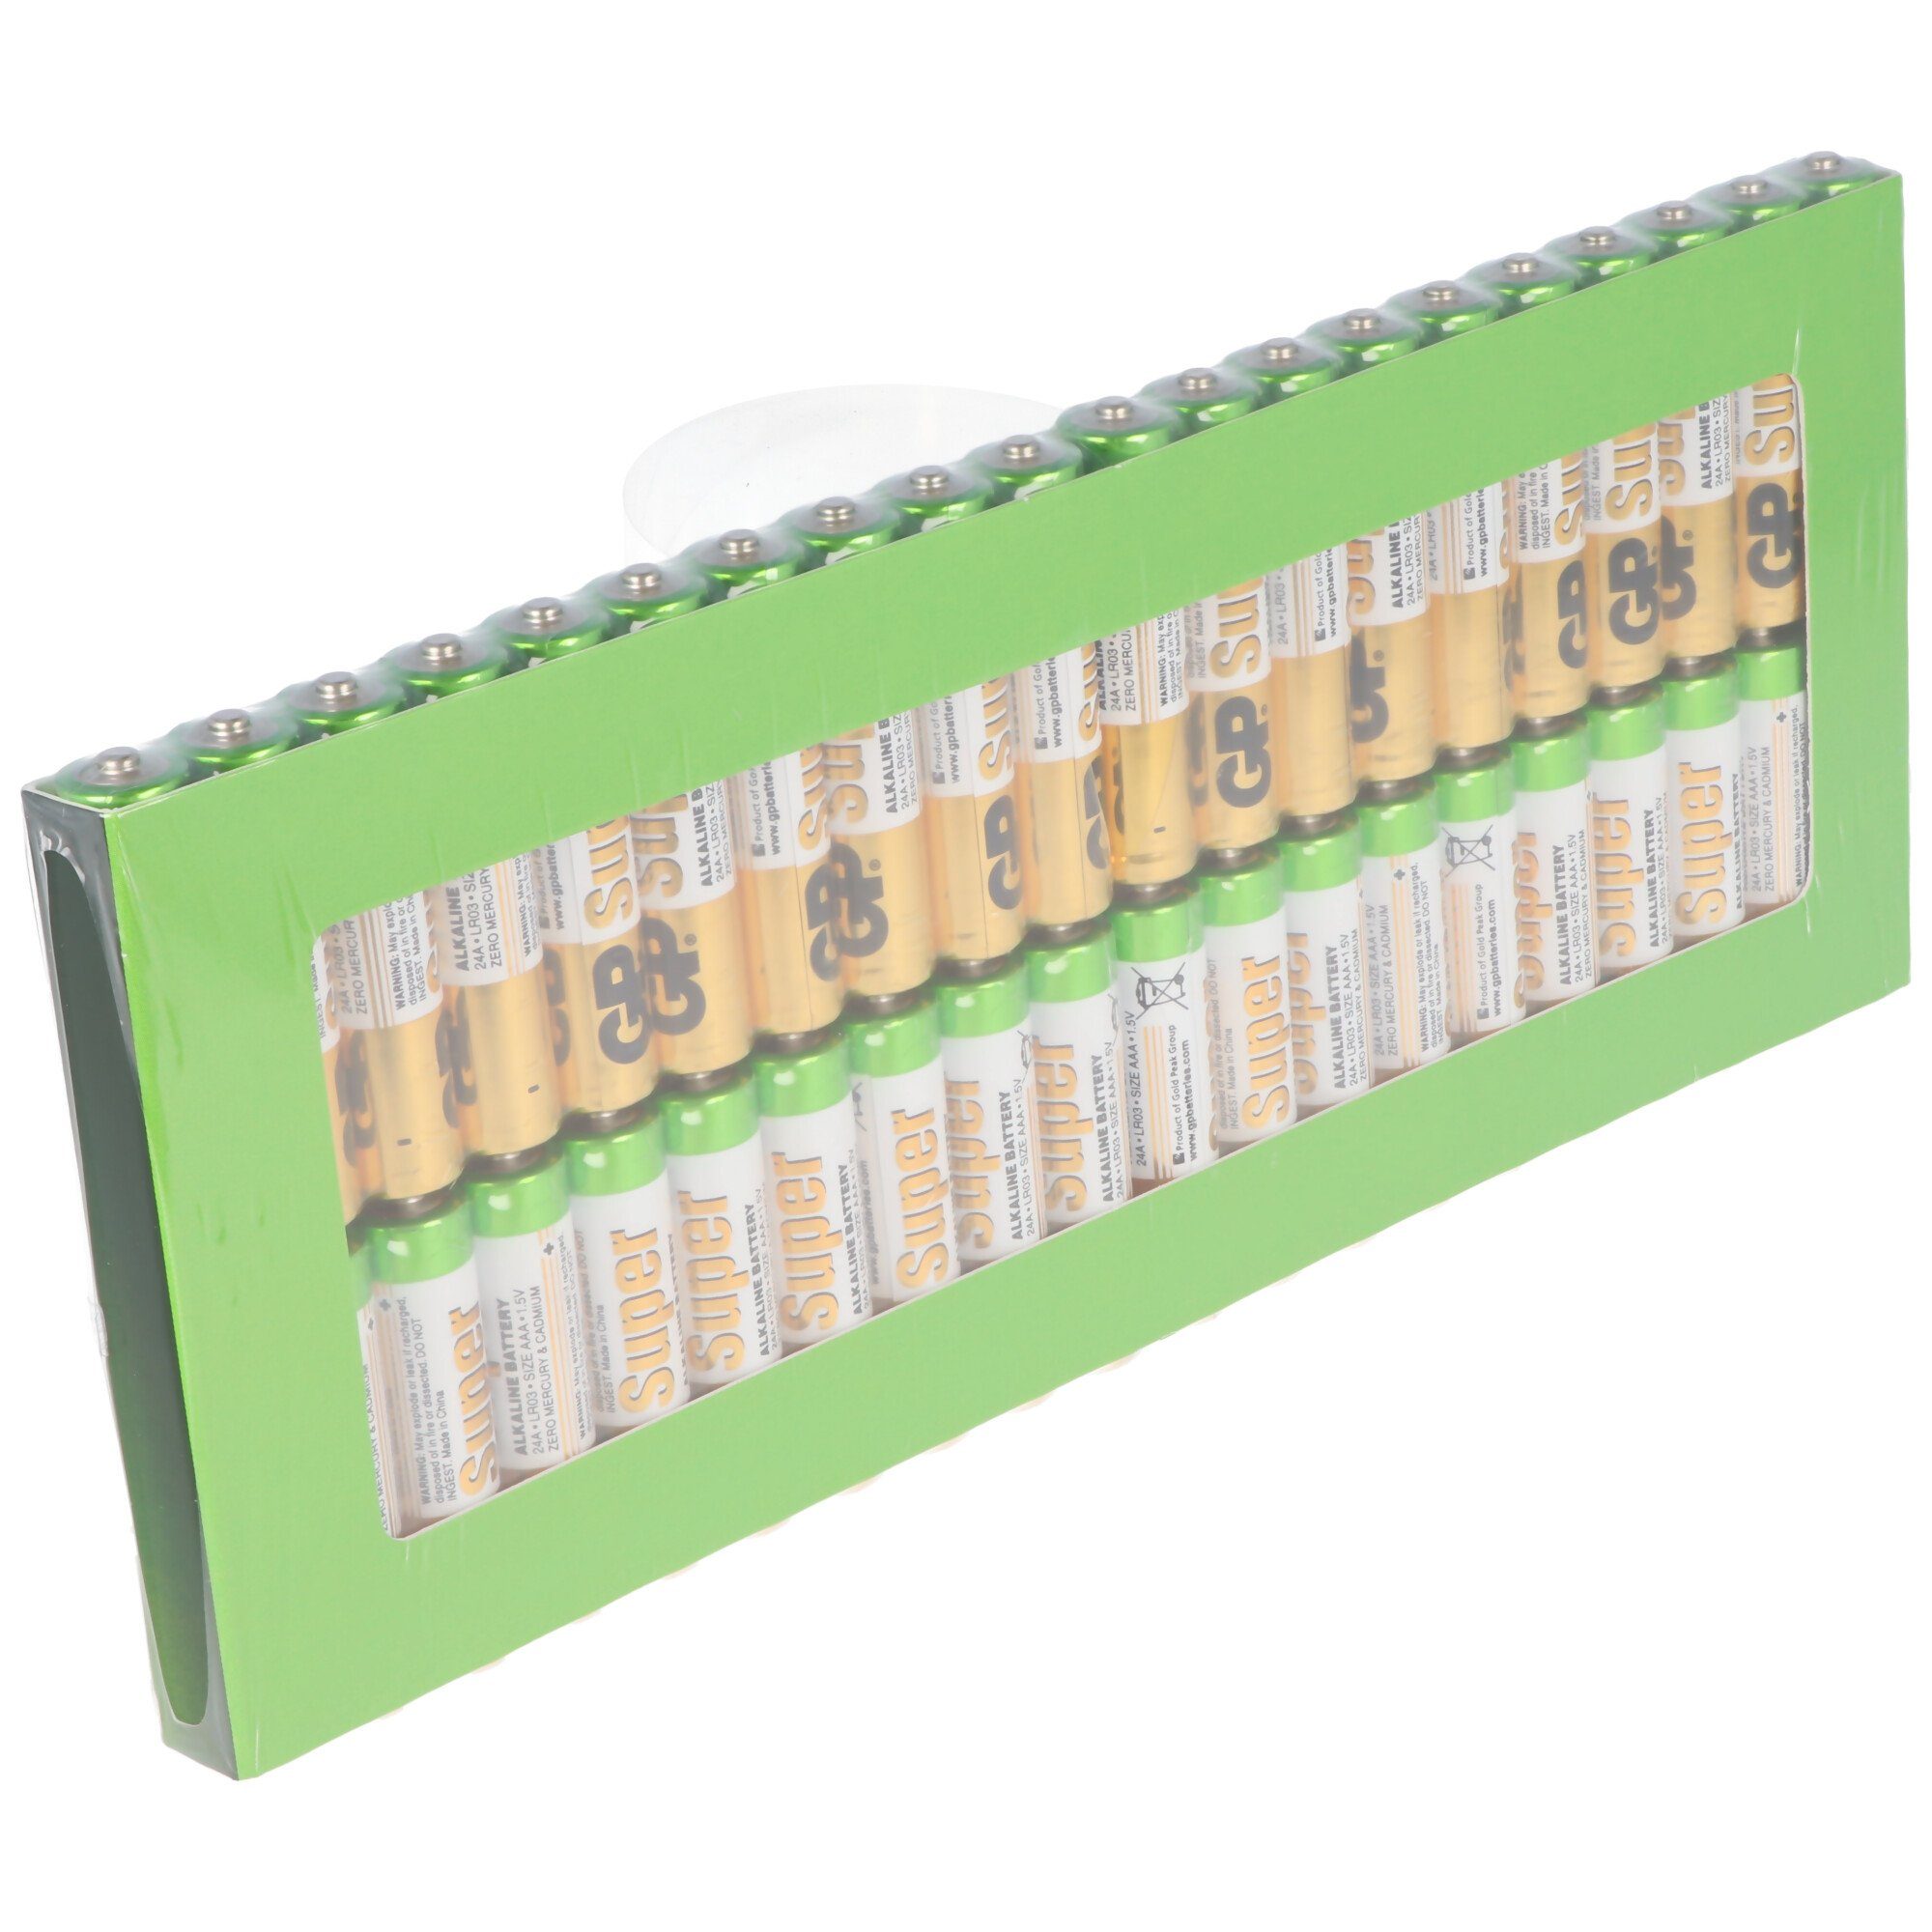 GP Batteries AAA Micro Batterie GP Alkaline Super 1,5V 40 Stück Batterie, (1,5 V)